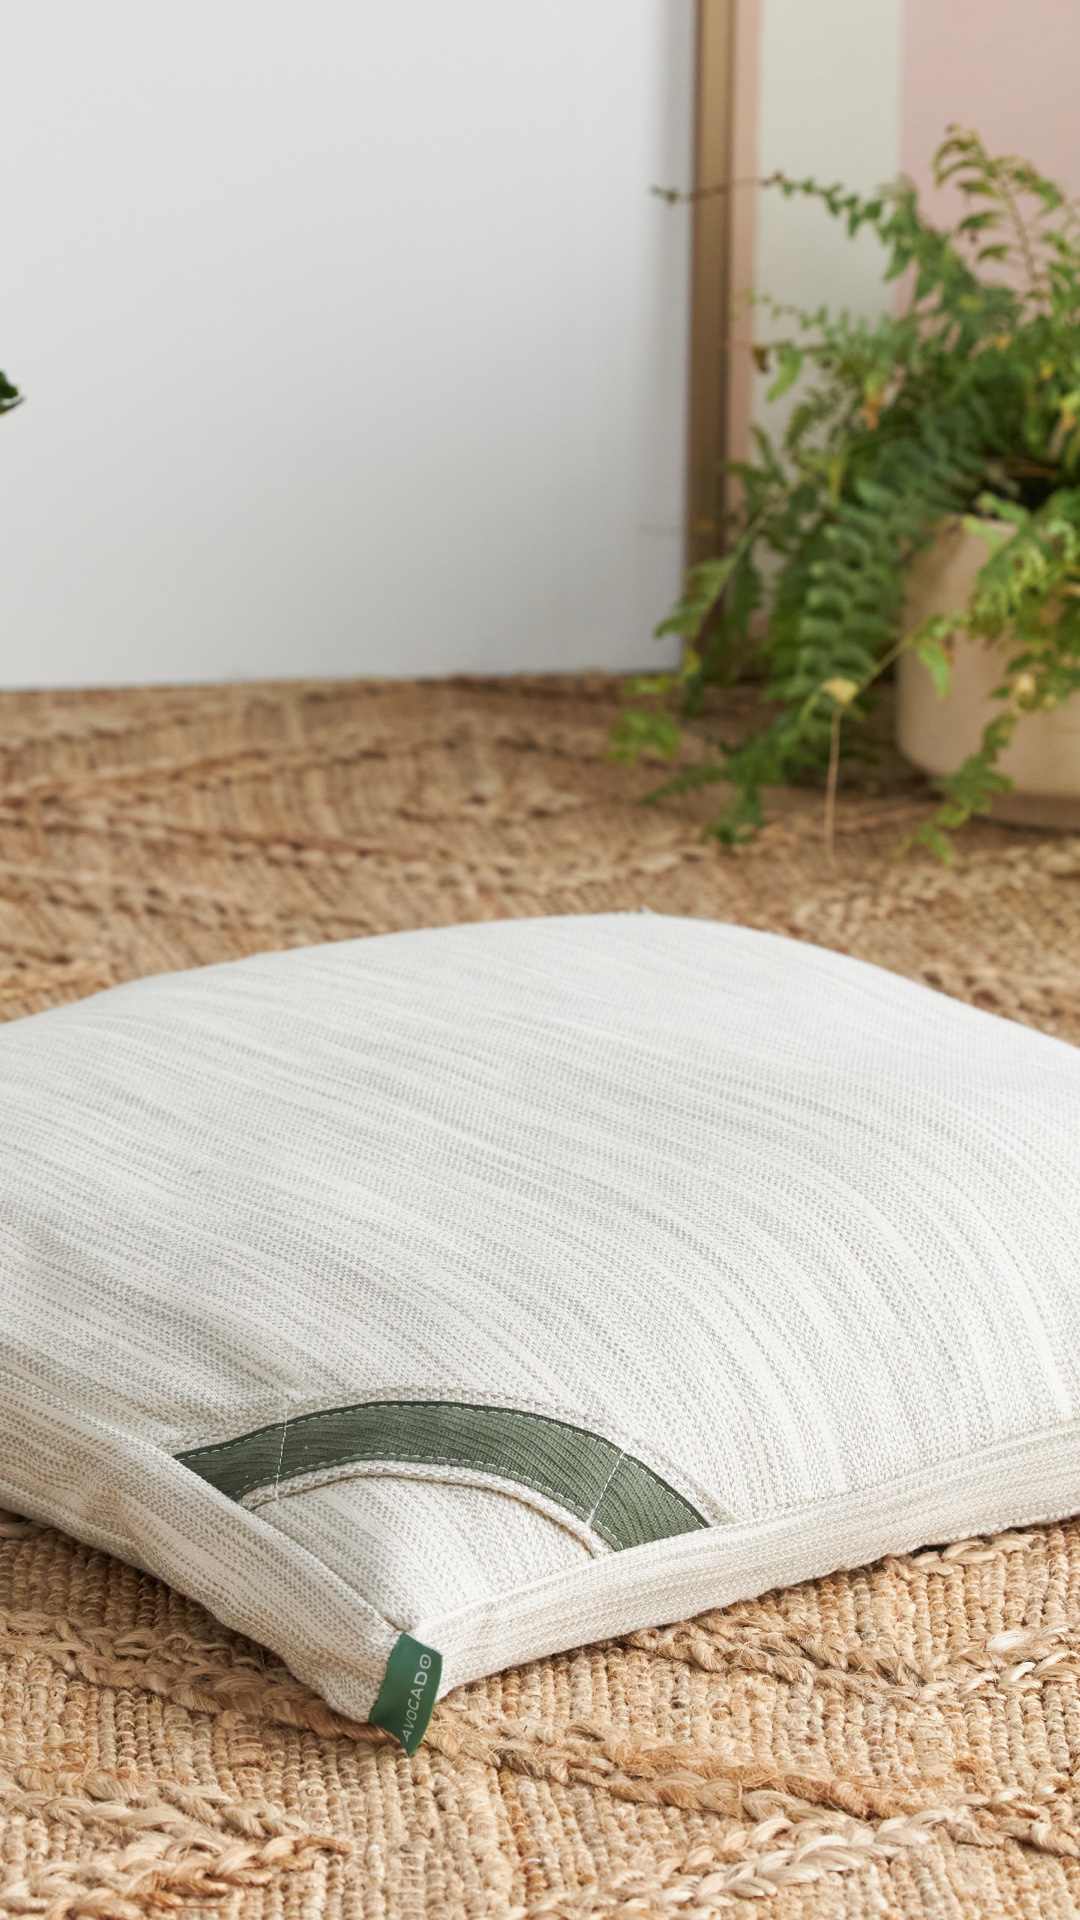 Avocado Organic Square Meditation Yoga Pillow